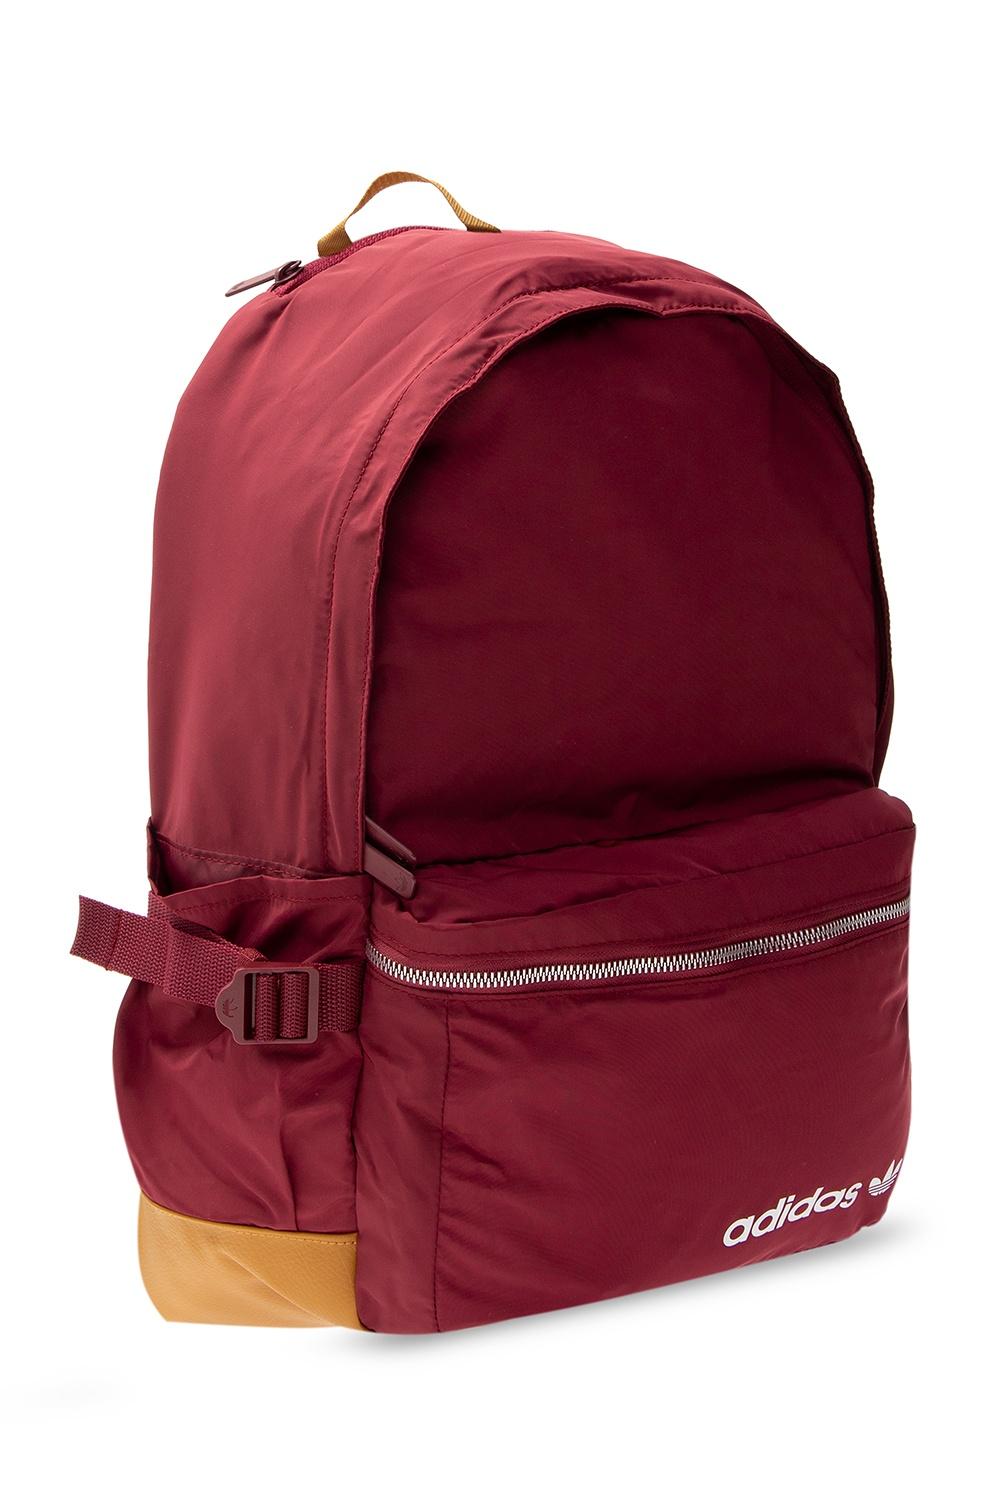 adidas Originals Logo Backpack Burgundy in Red for Men - Lyst